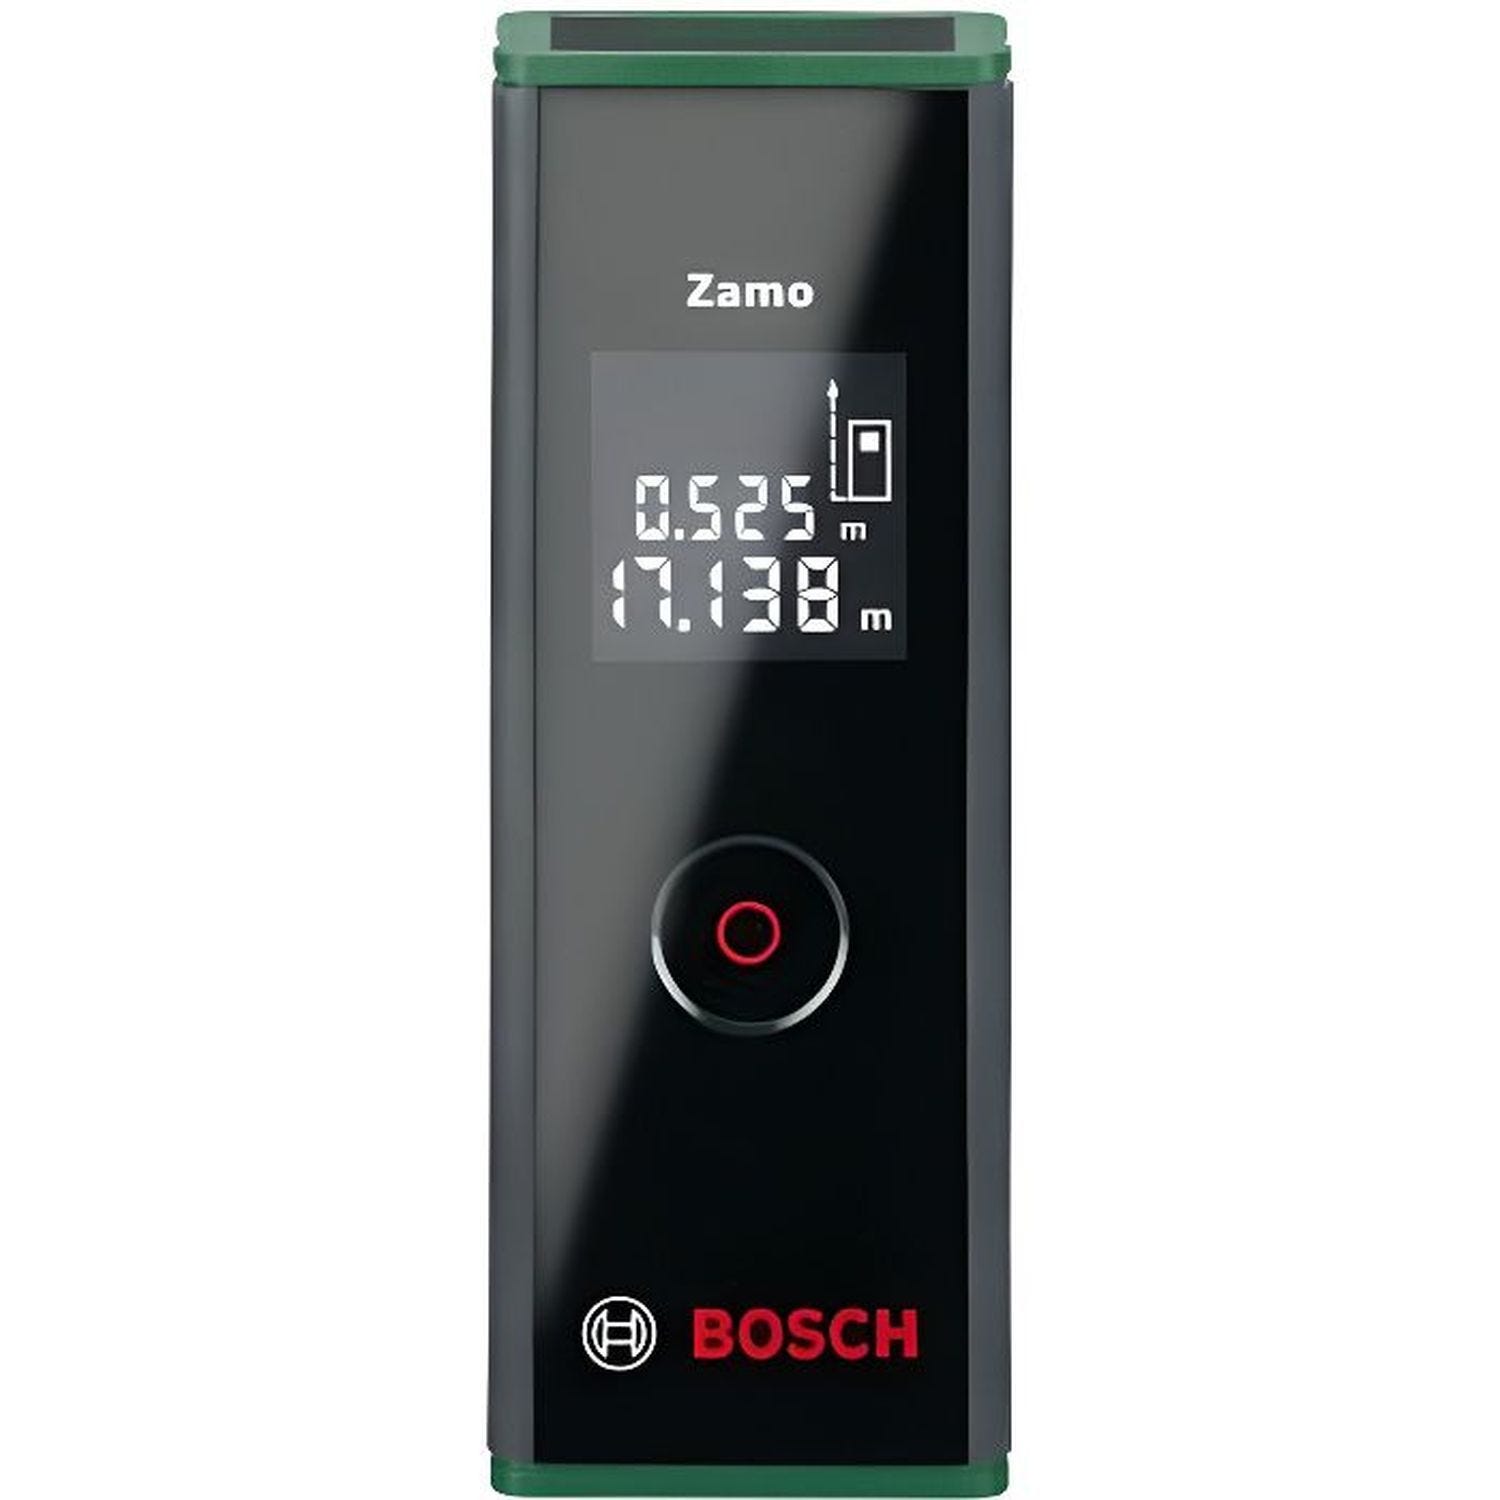 Télémetre Laser Bosch - Zamo 3e Génération, portée jusqu'à 20 m - Bosch